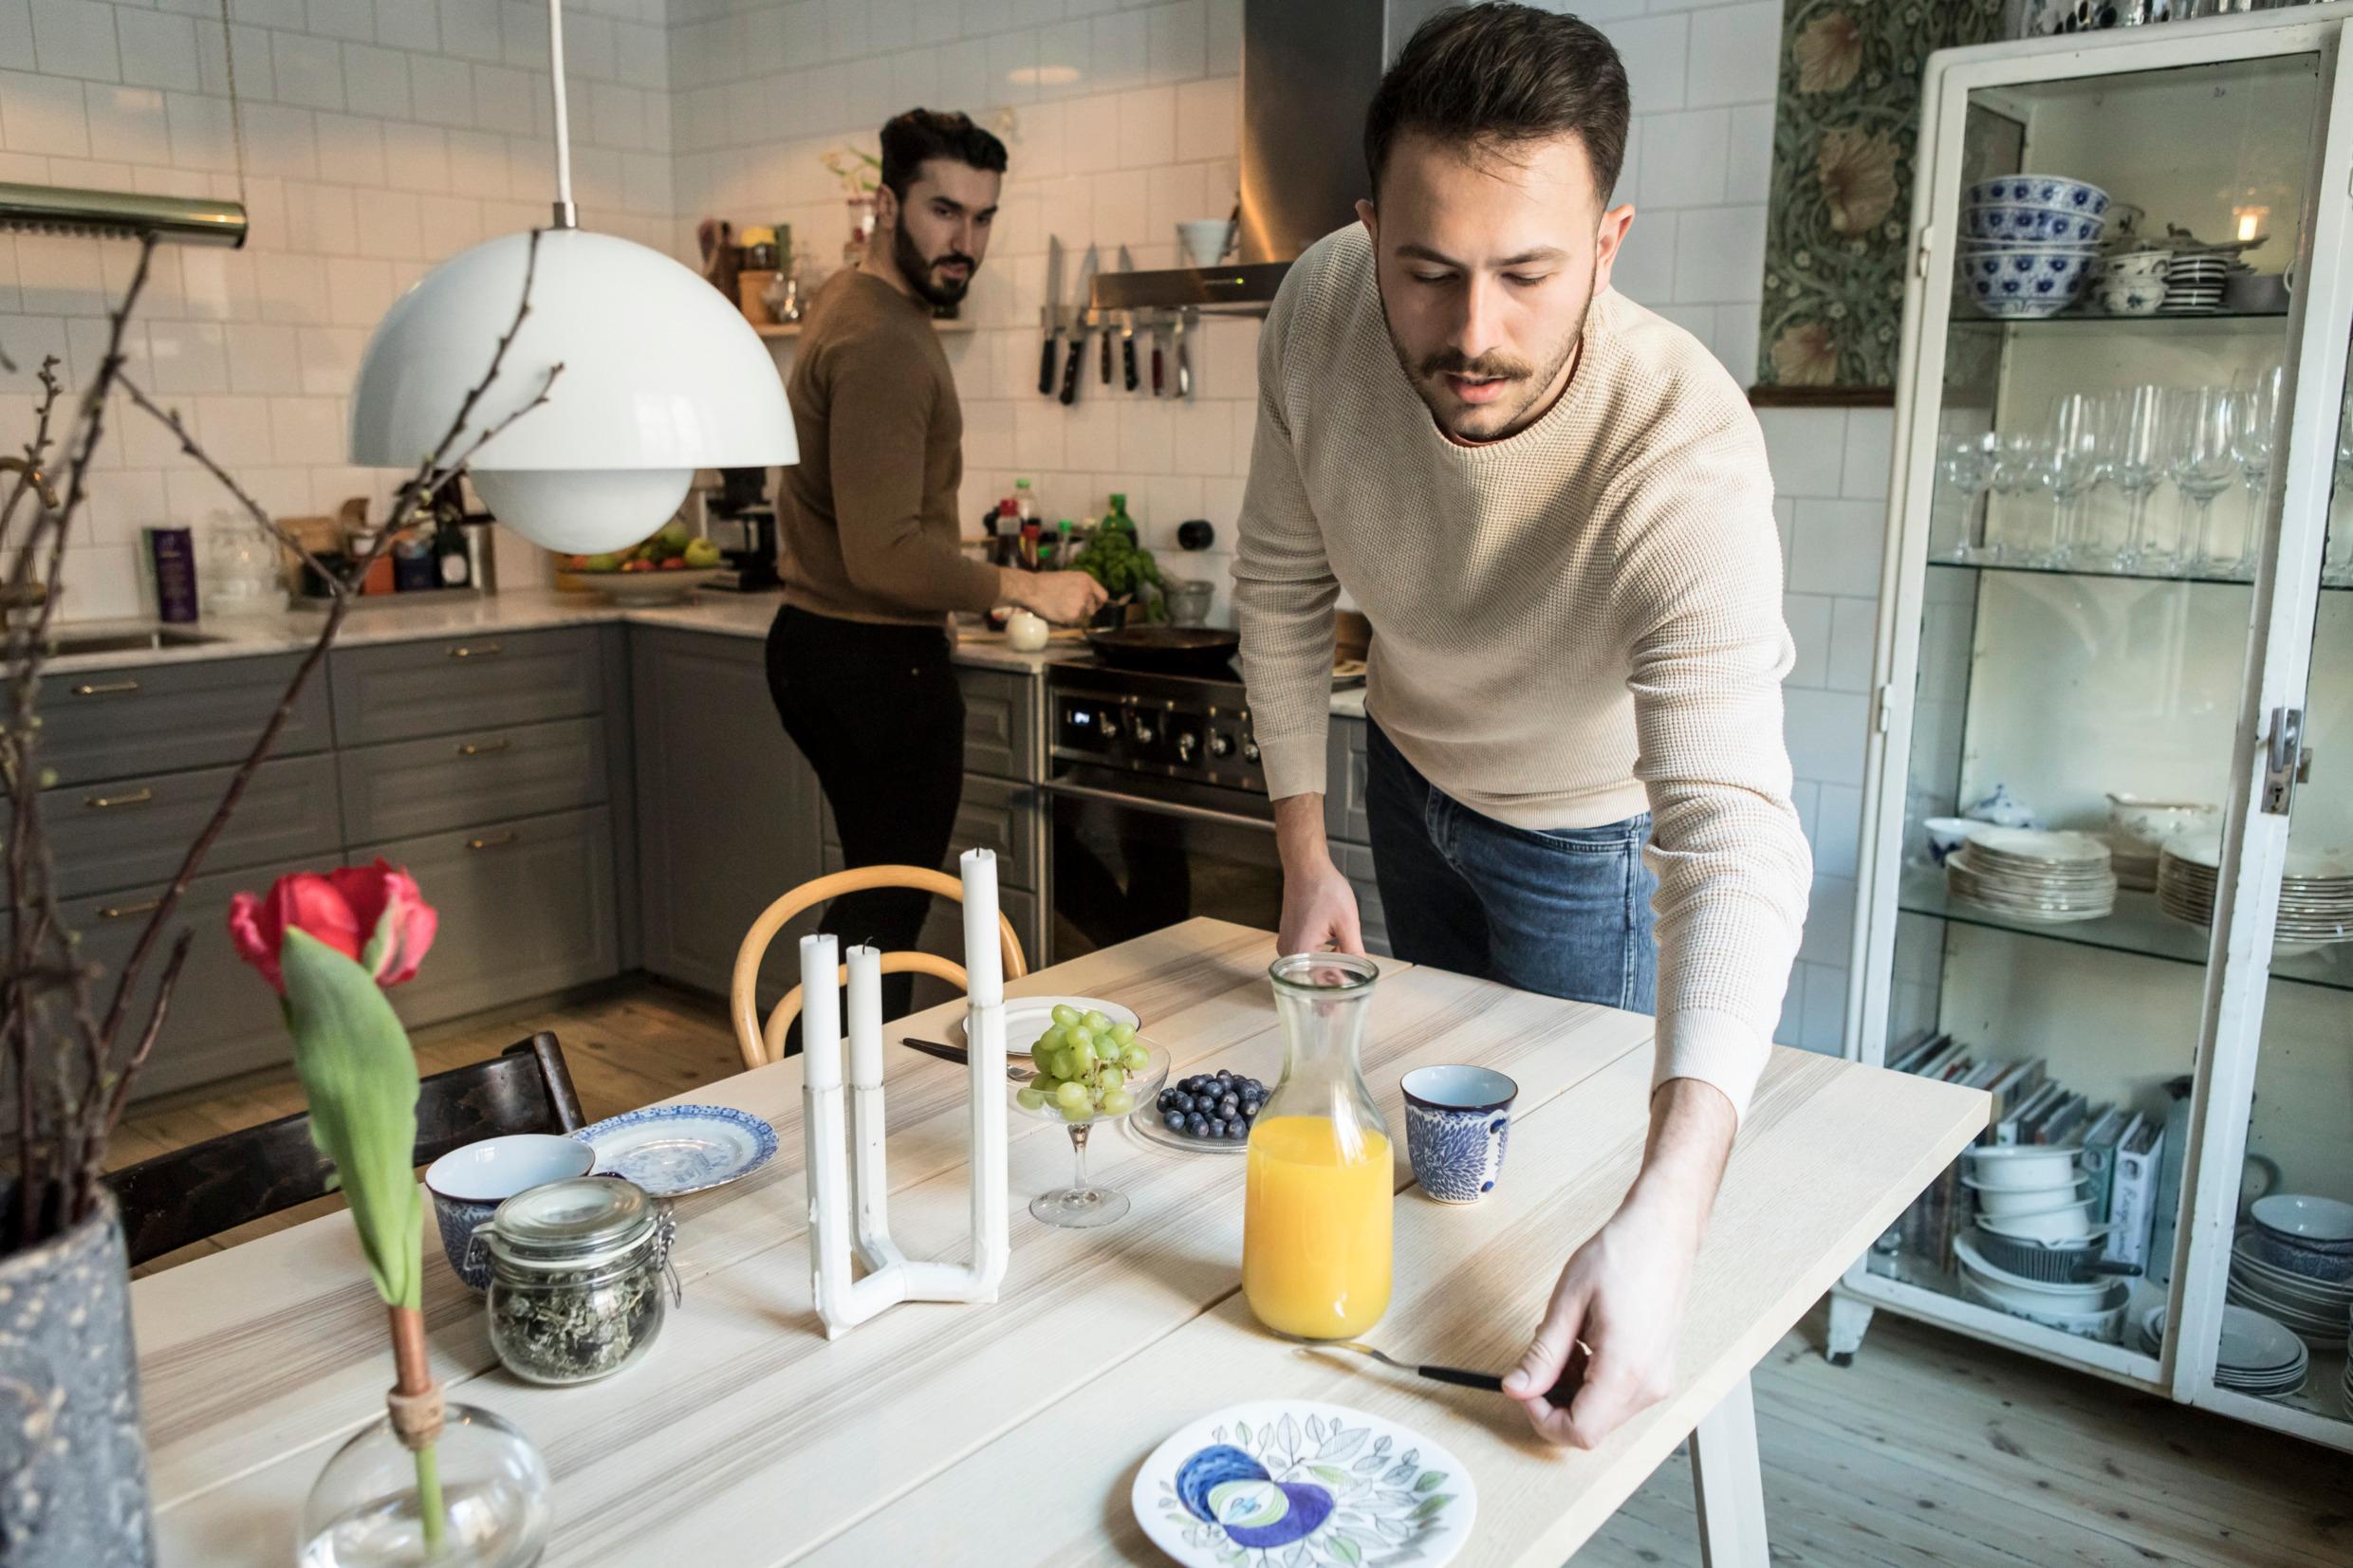 Two men in a kitchen are preparing breakfast.